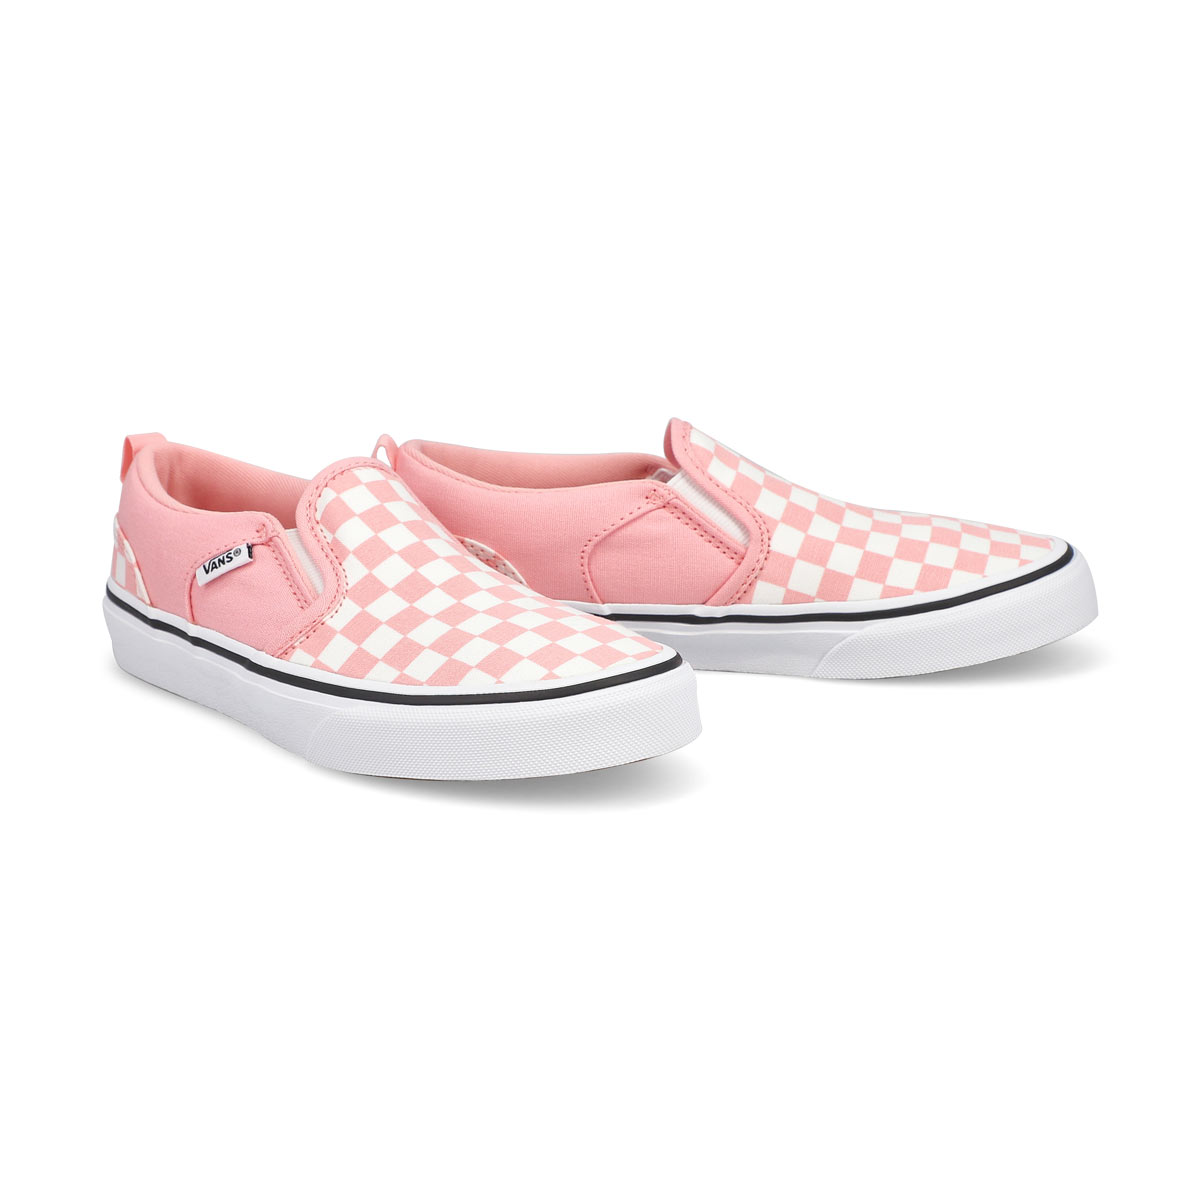 Girls' Asher Sneaker - Checkered Pink/White